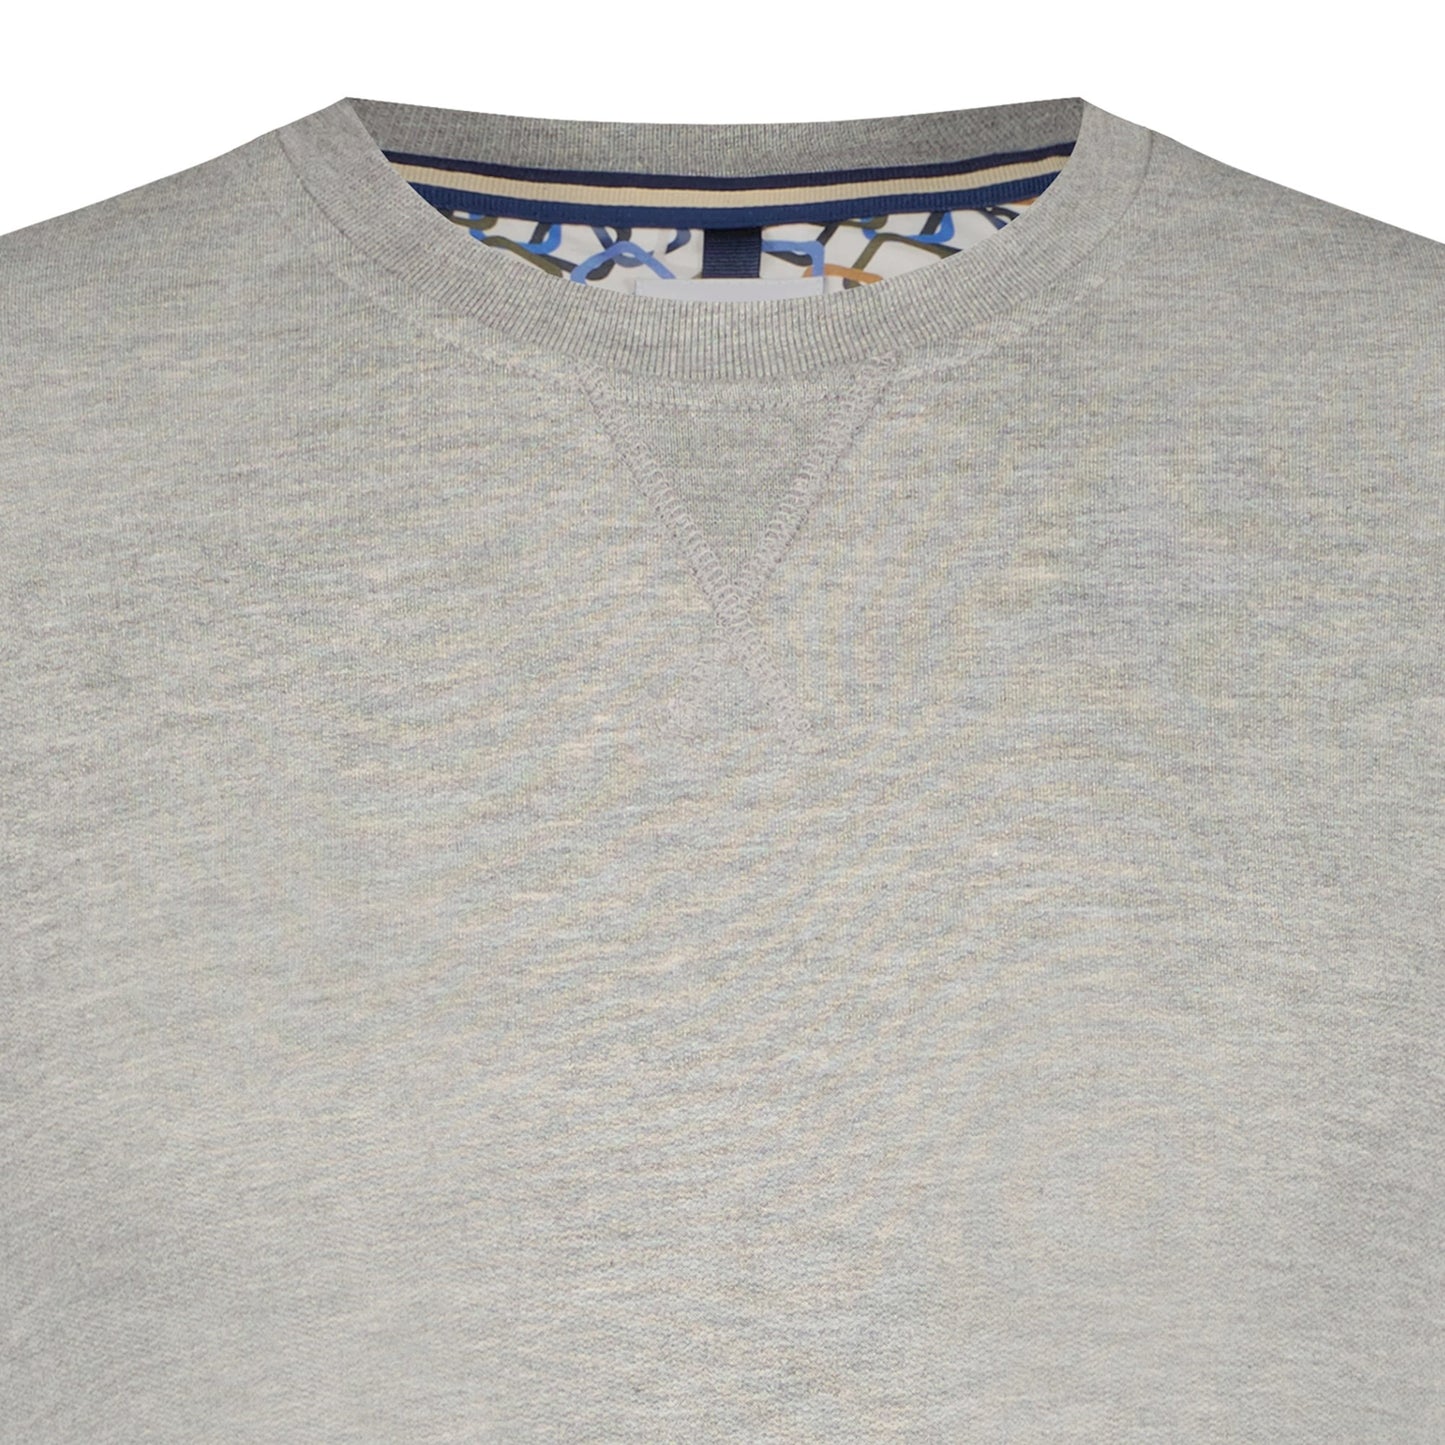 Supersoft sweatshirt in light grey by R2